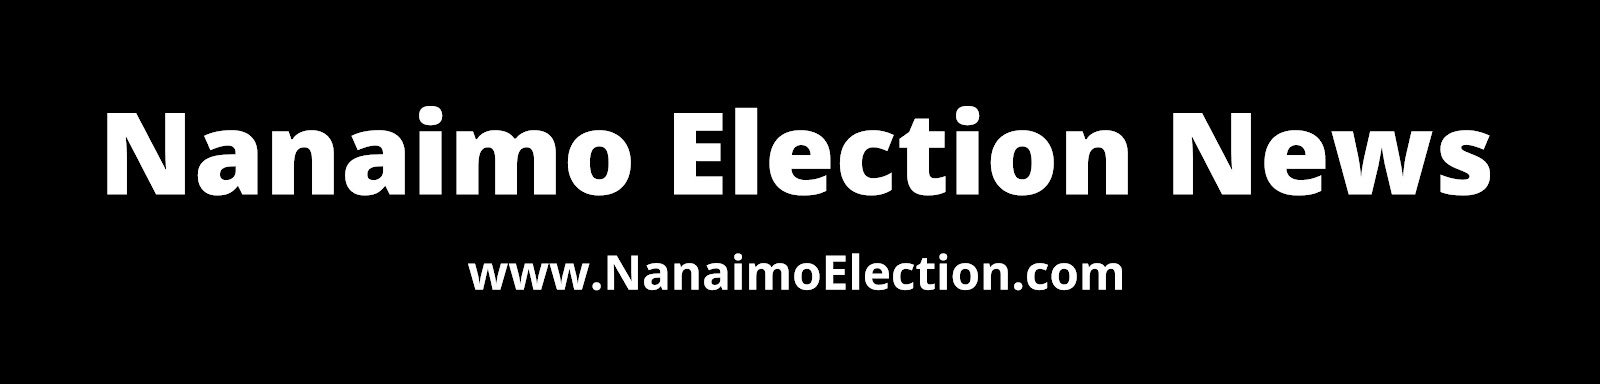 Nanaimo Election